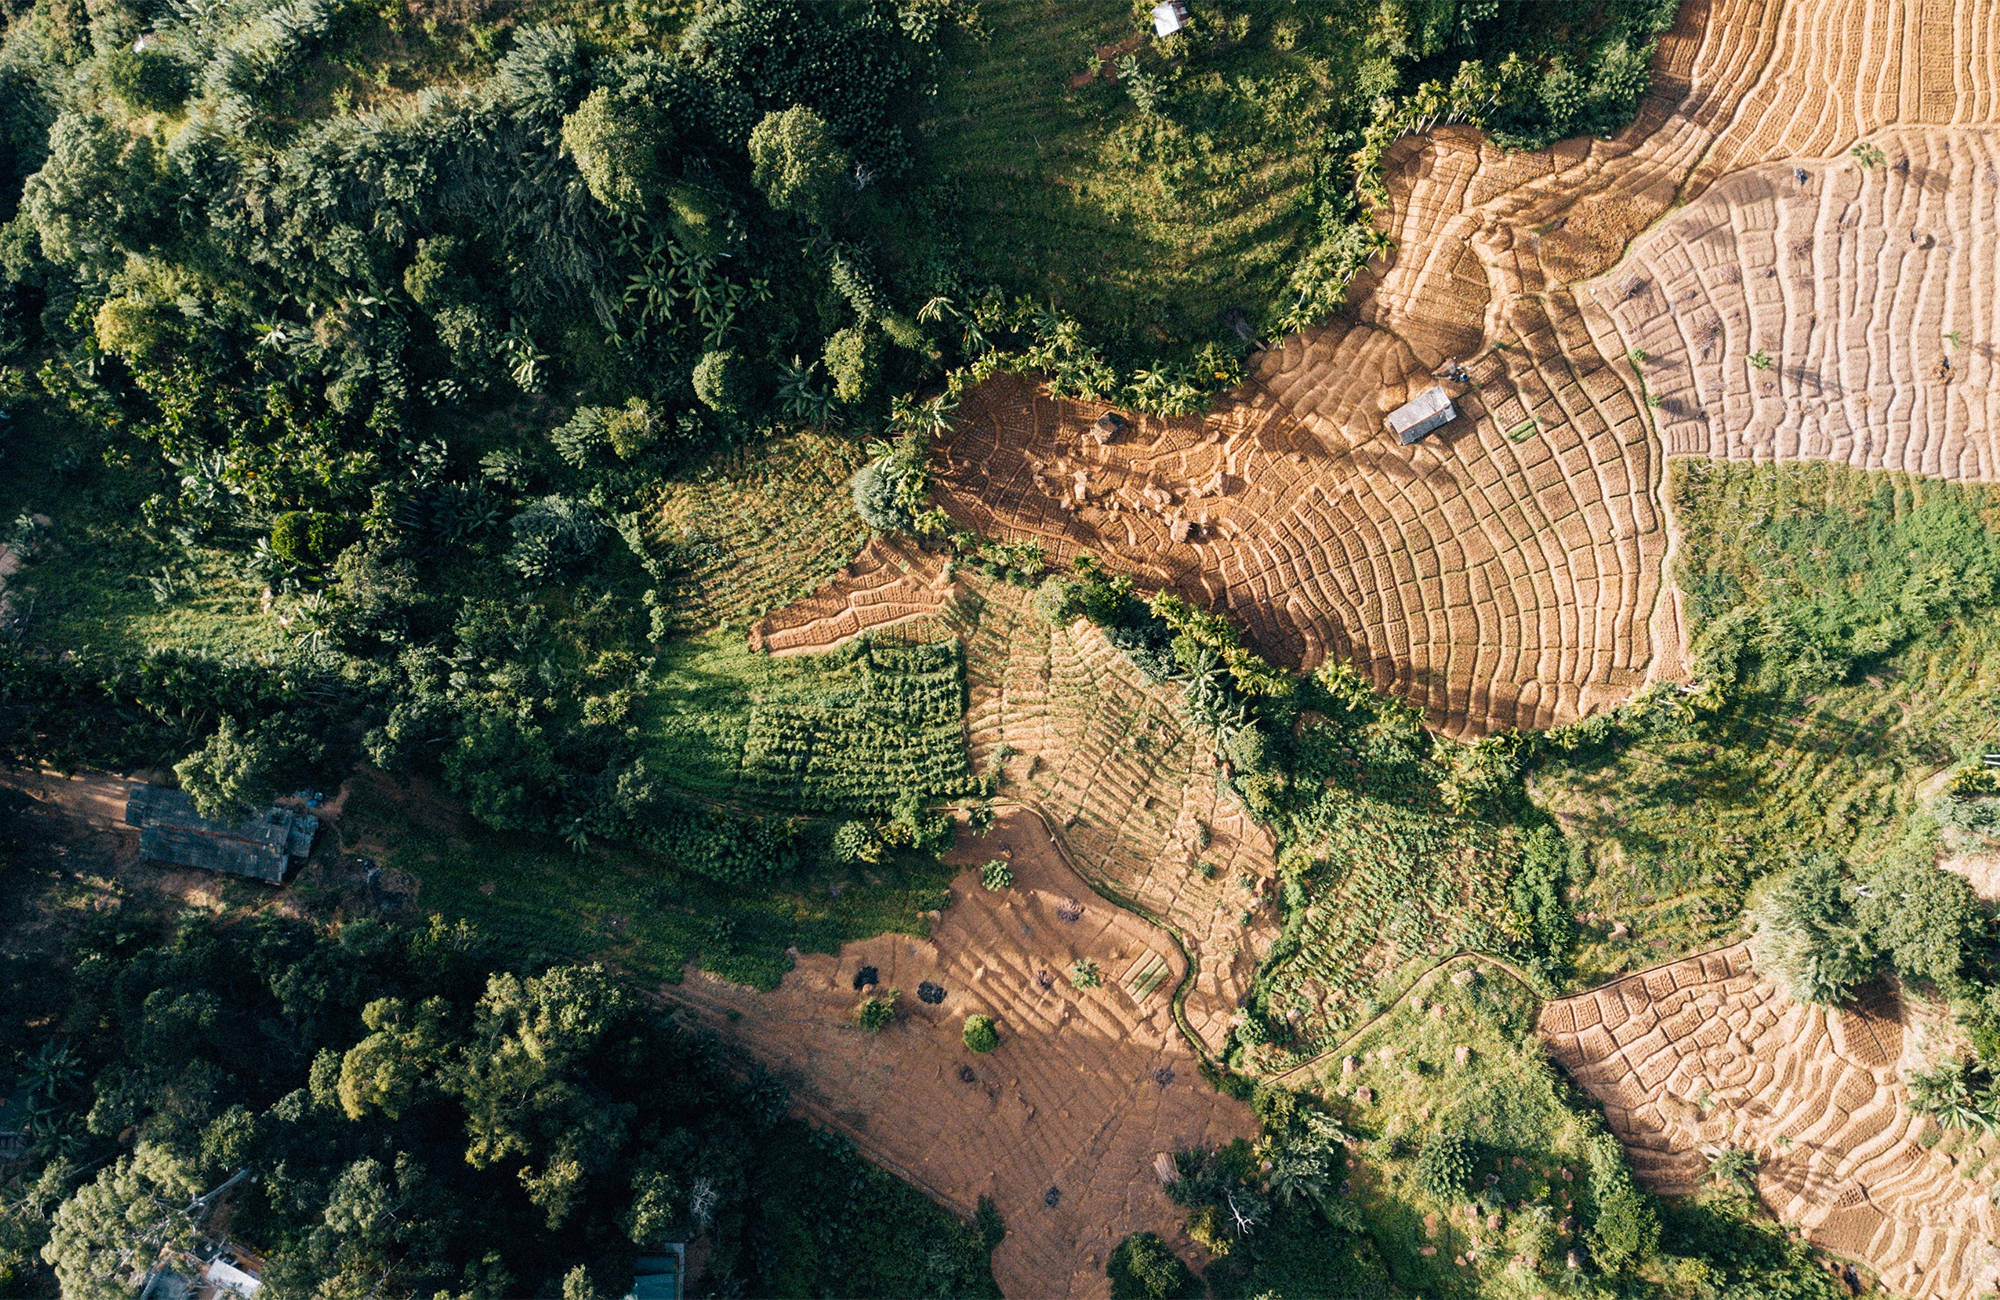 Oplev de smukke risterrasser i Sri Lanka